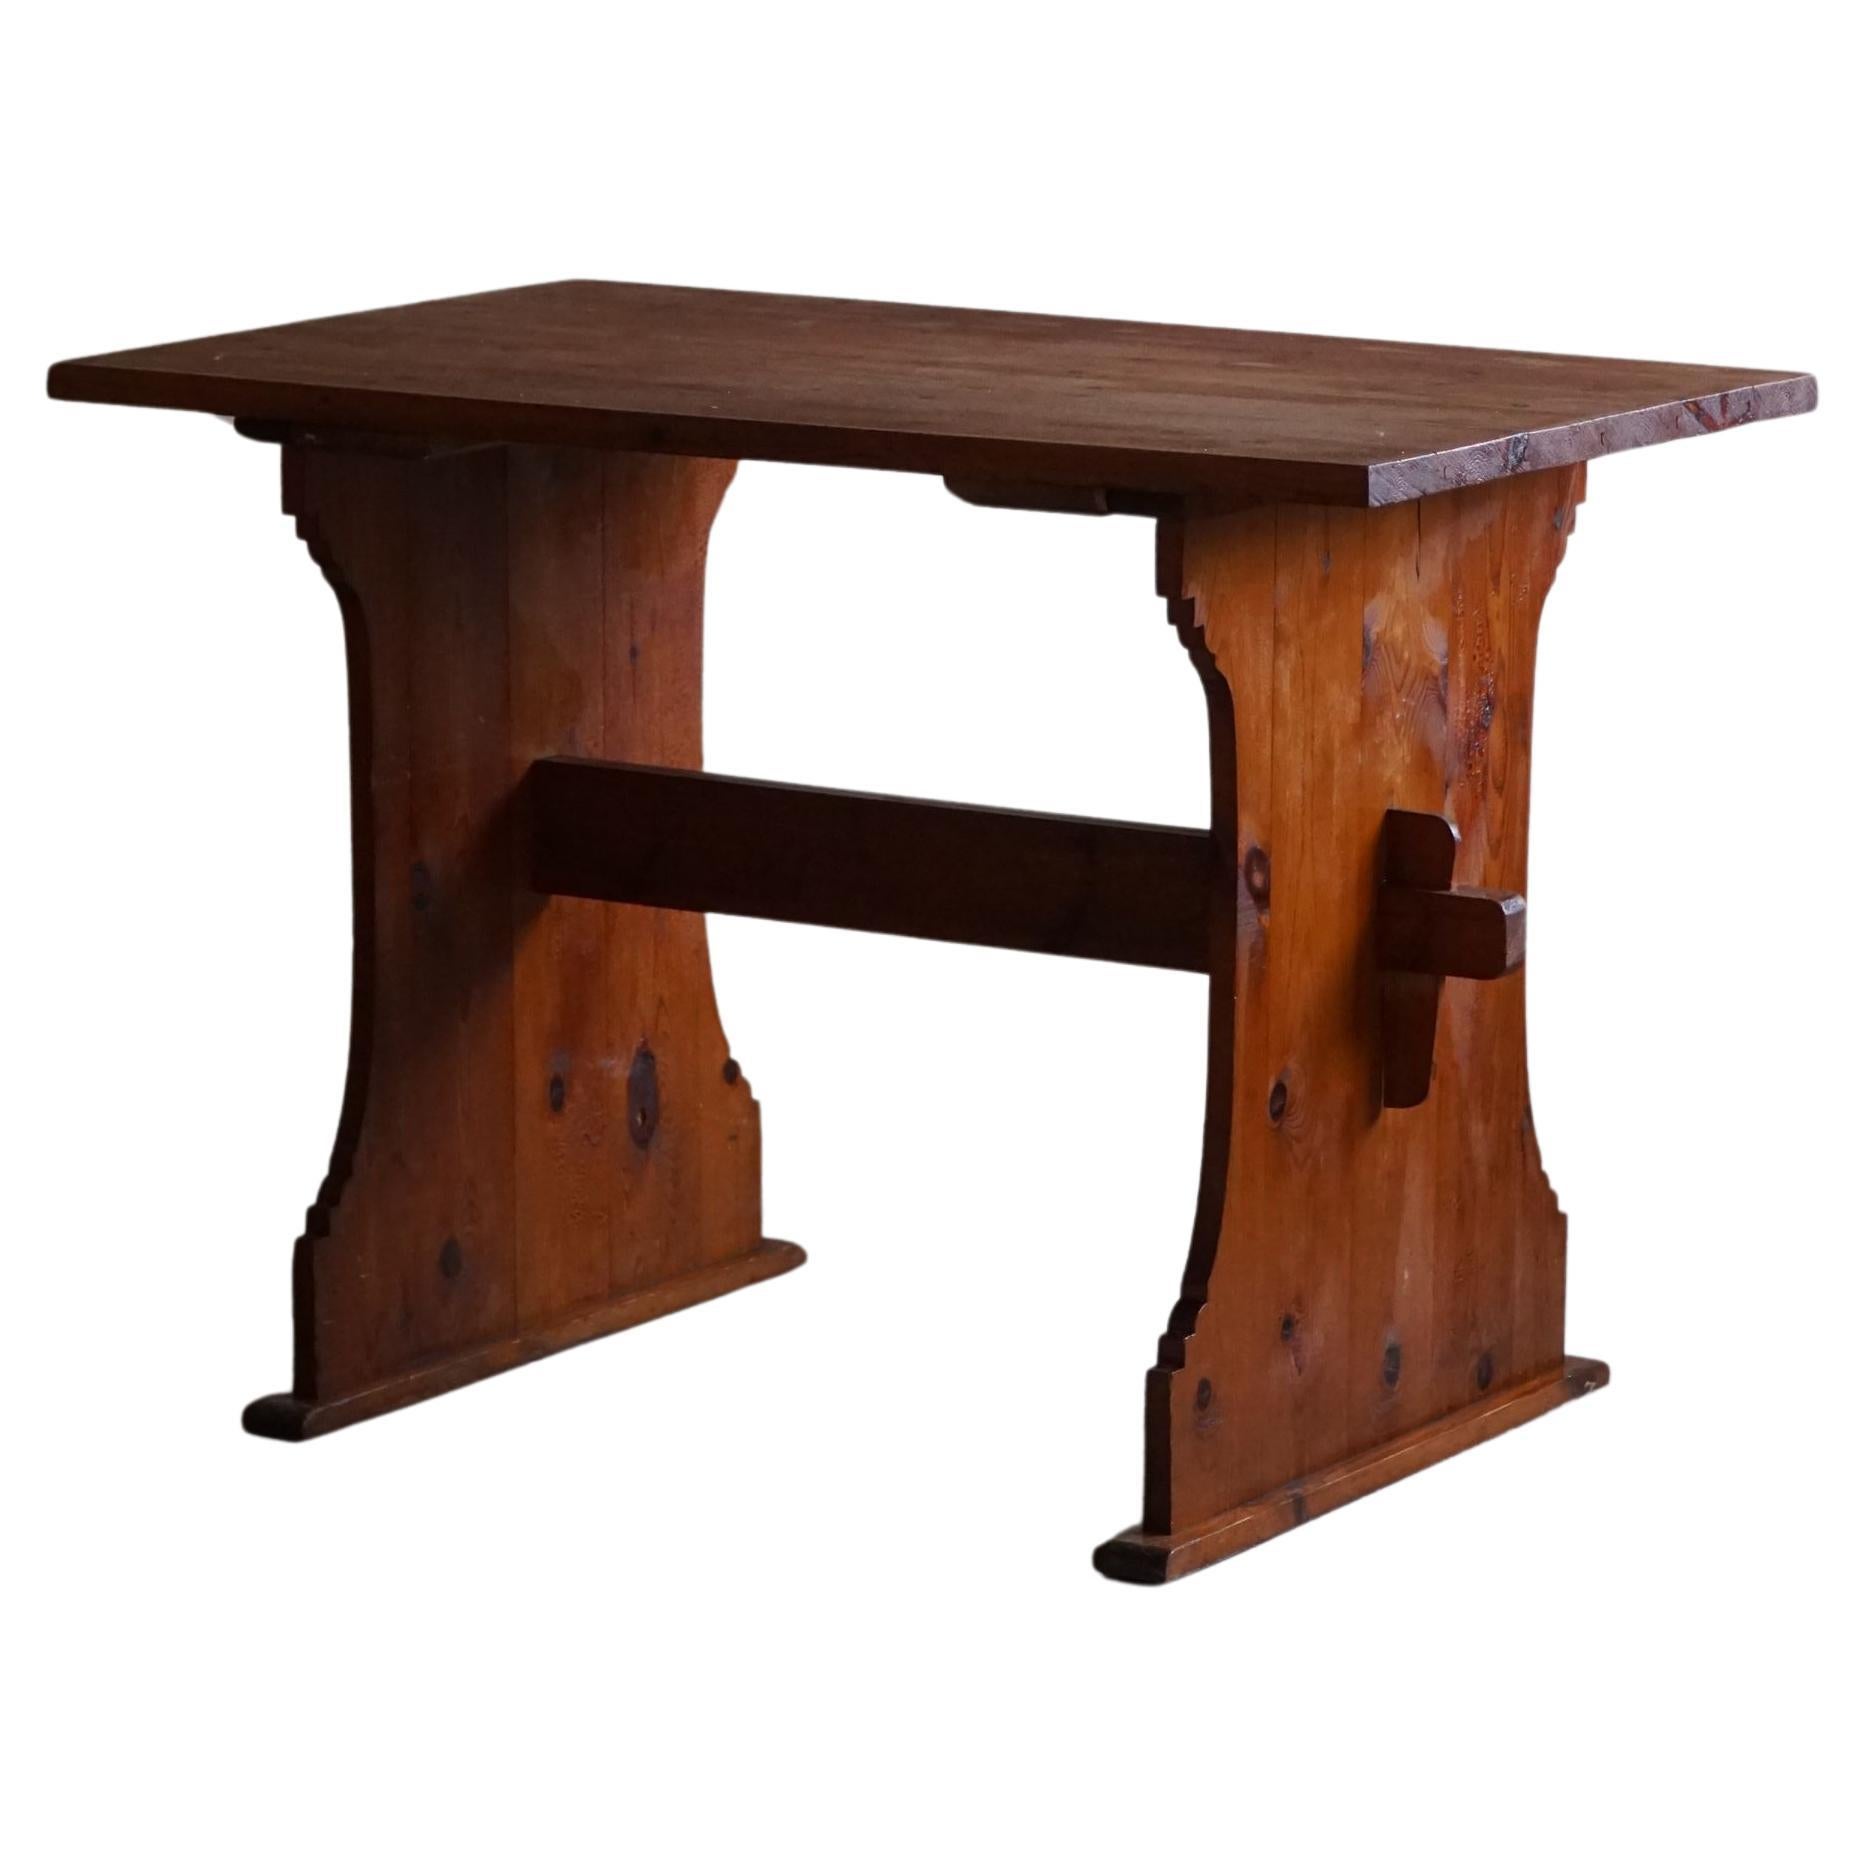 Swedish Modern Pine Desk, Axel Einar Hjorth Style, Made in the 1940s